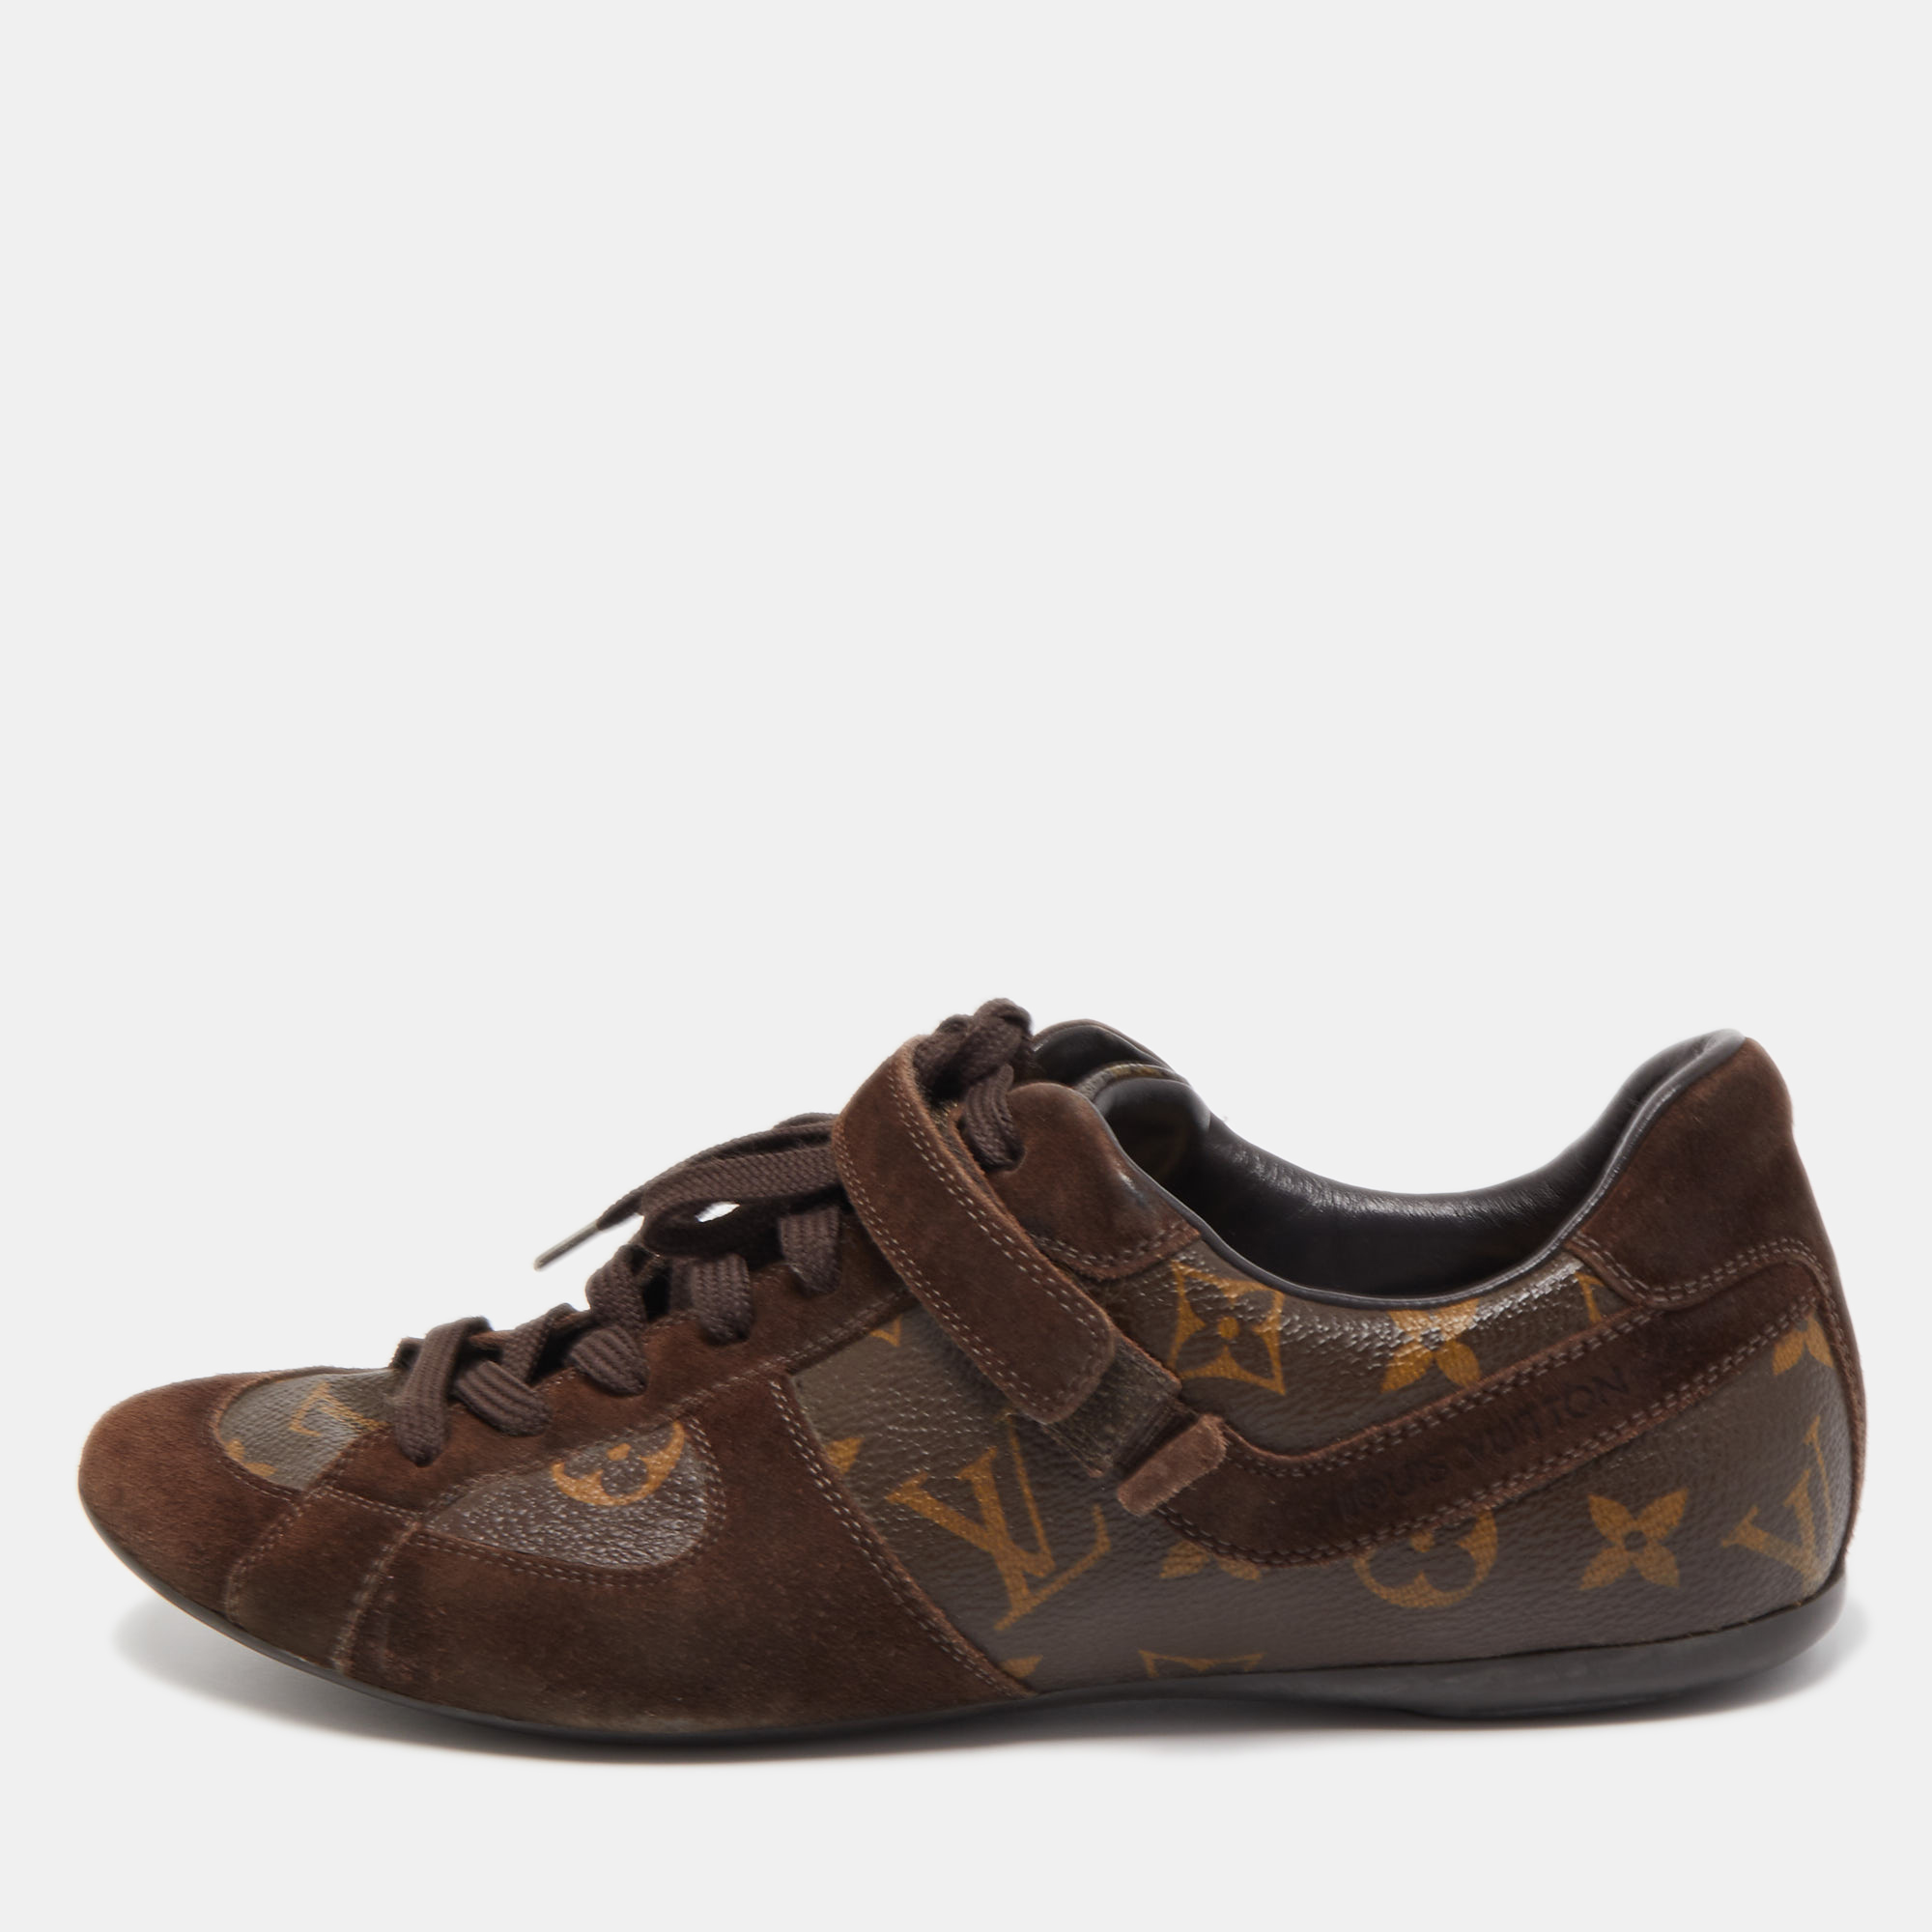 Women's Louis Vuitton Sneakers from $971